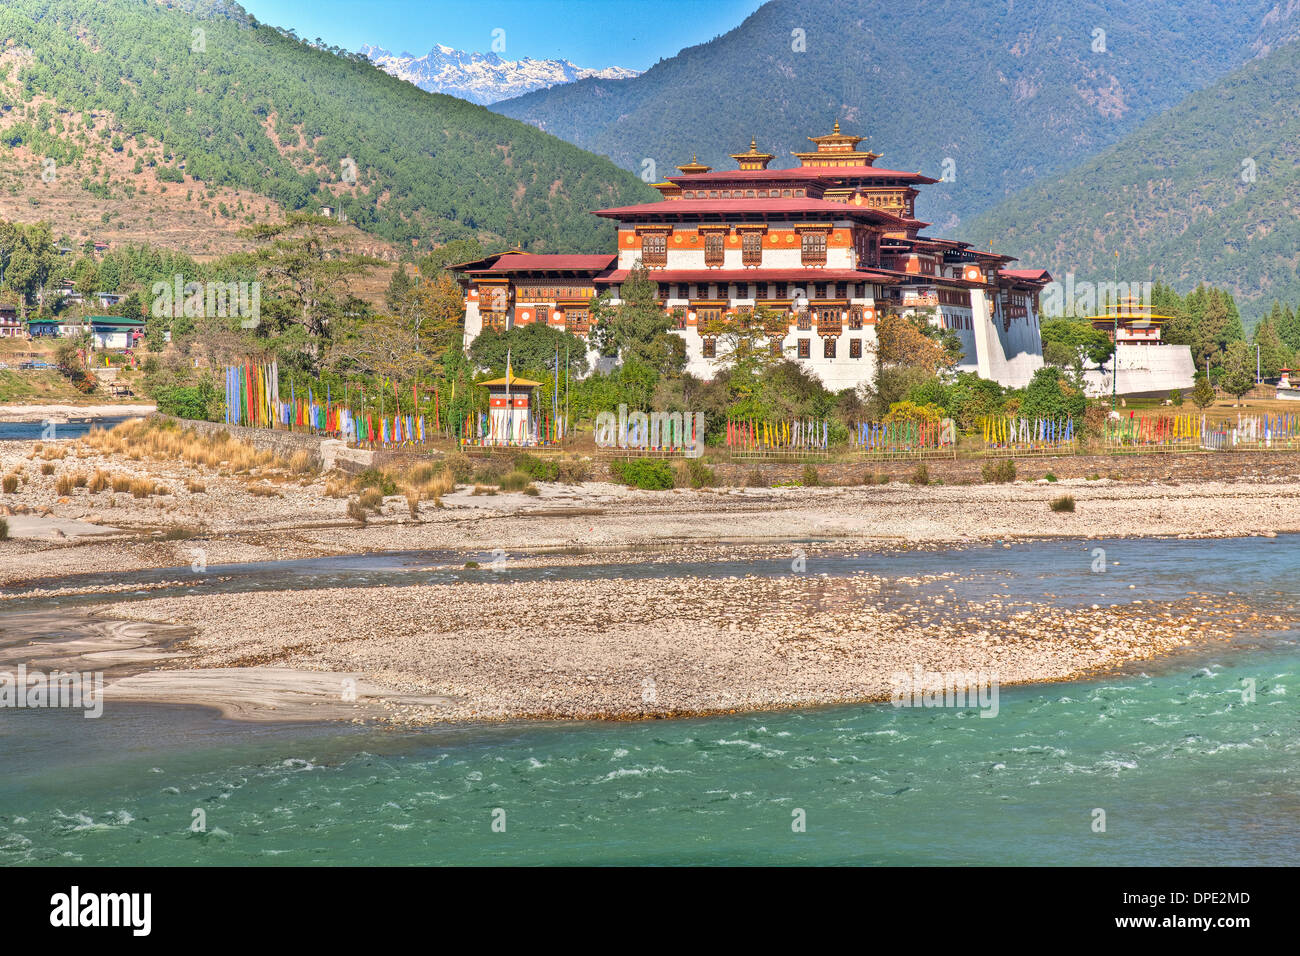 Punakha Dzong Monastery Bhutan Himalayan Mountains Built originally in 1300s Sacred site for Bhutanese people on Phochu & Mochu Stock Photo